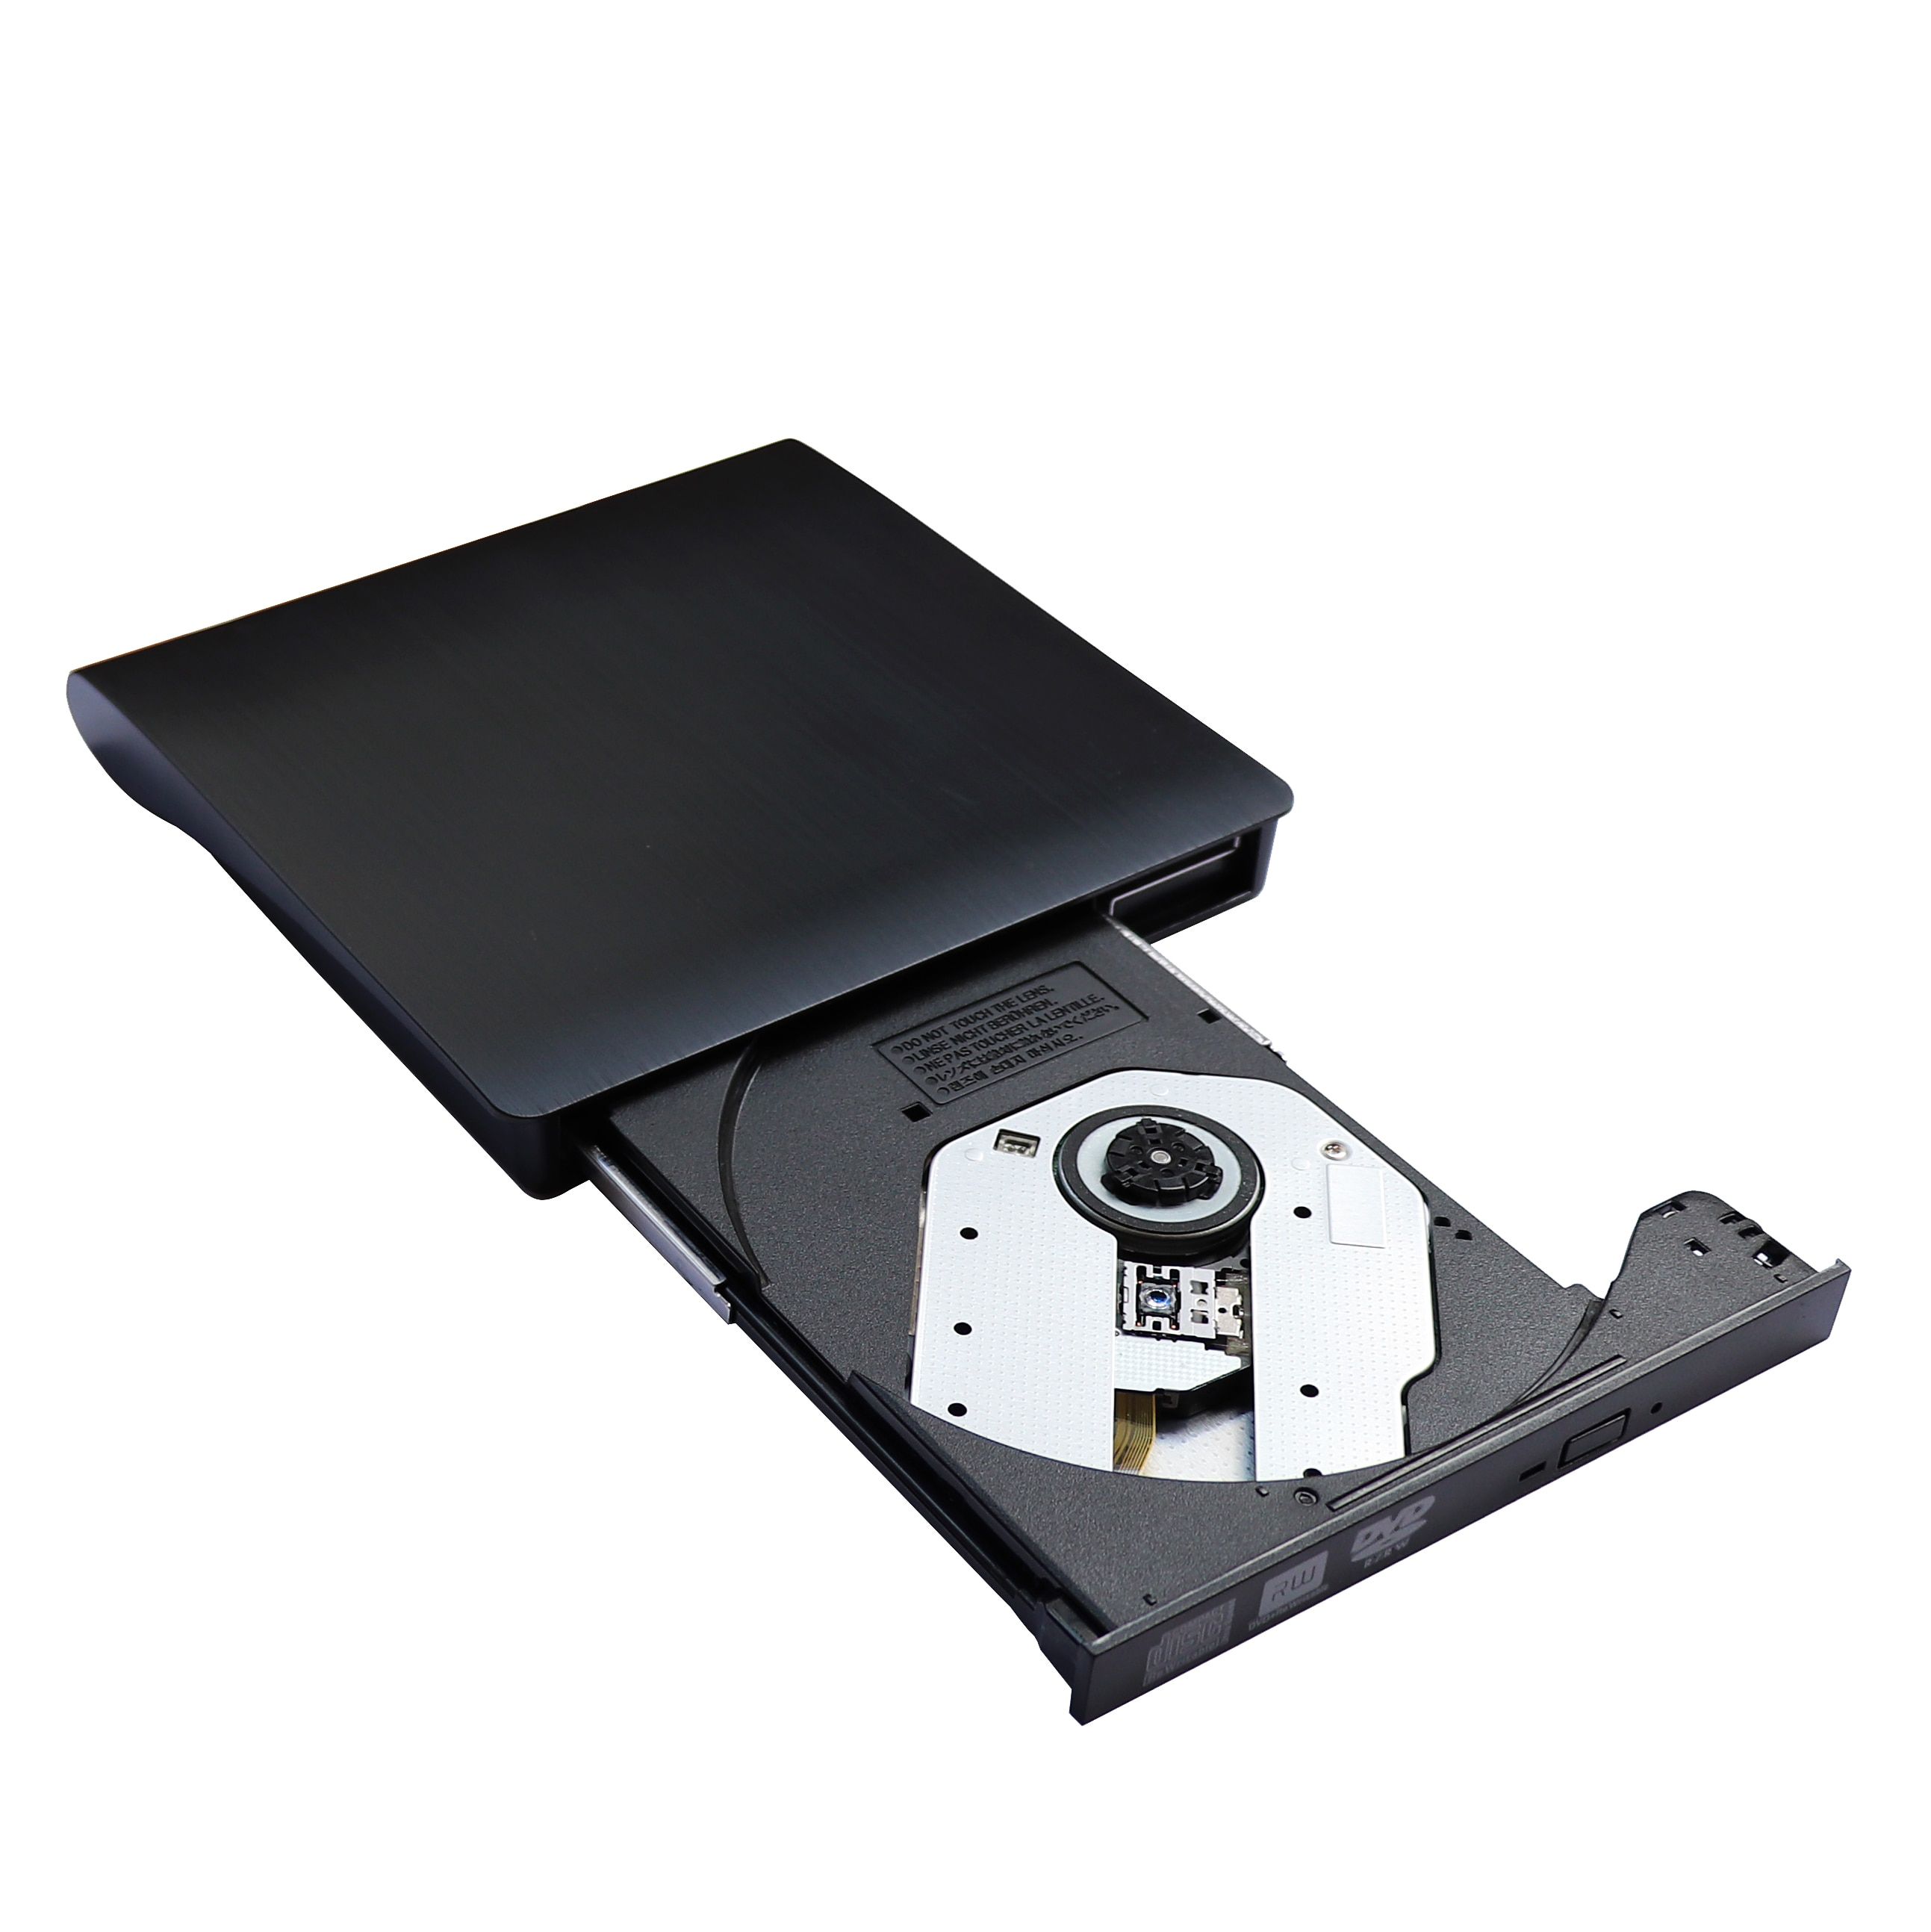 USB 3.0 ultra thin External DVD - RW CD Writer drive recorder Reader player Notebook PC CD Drive DVD Recorder DVD Portal